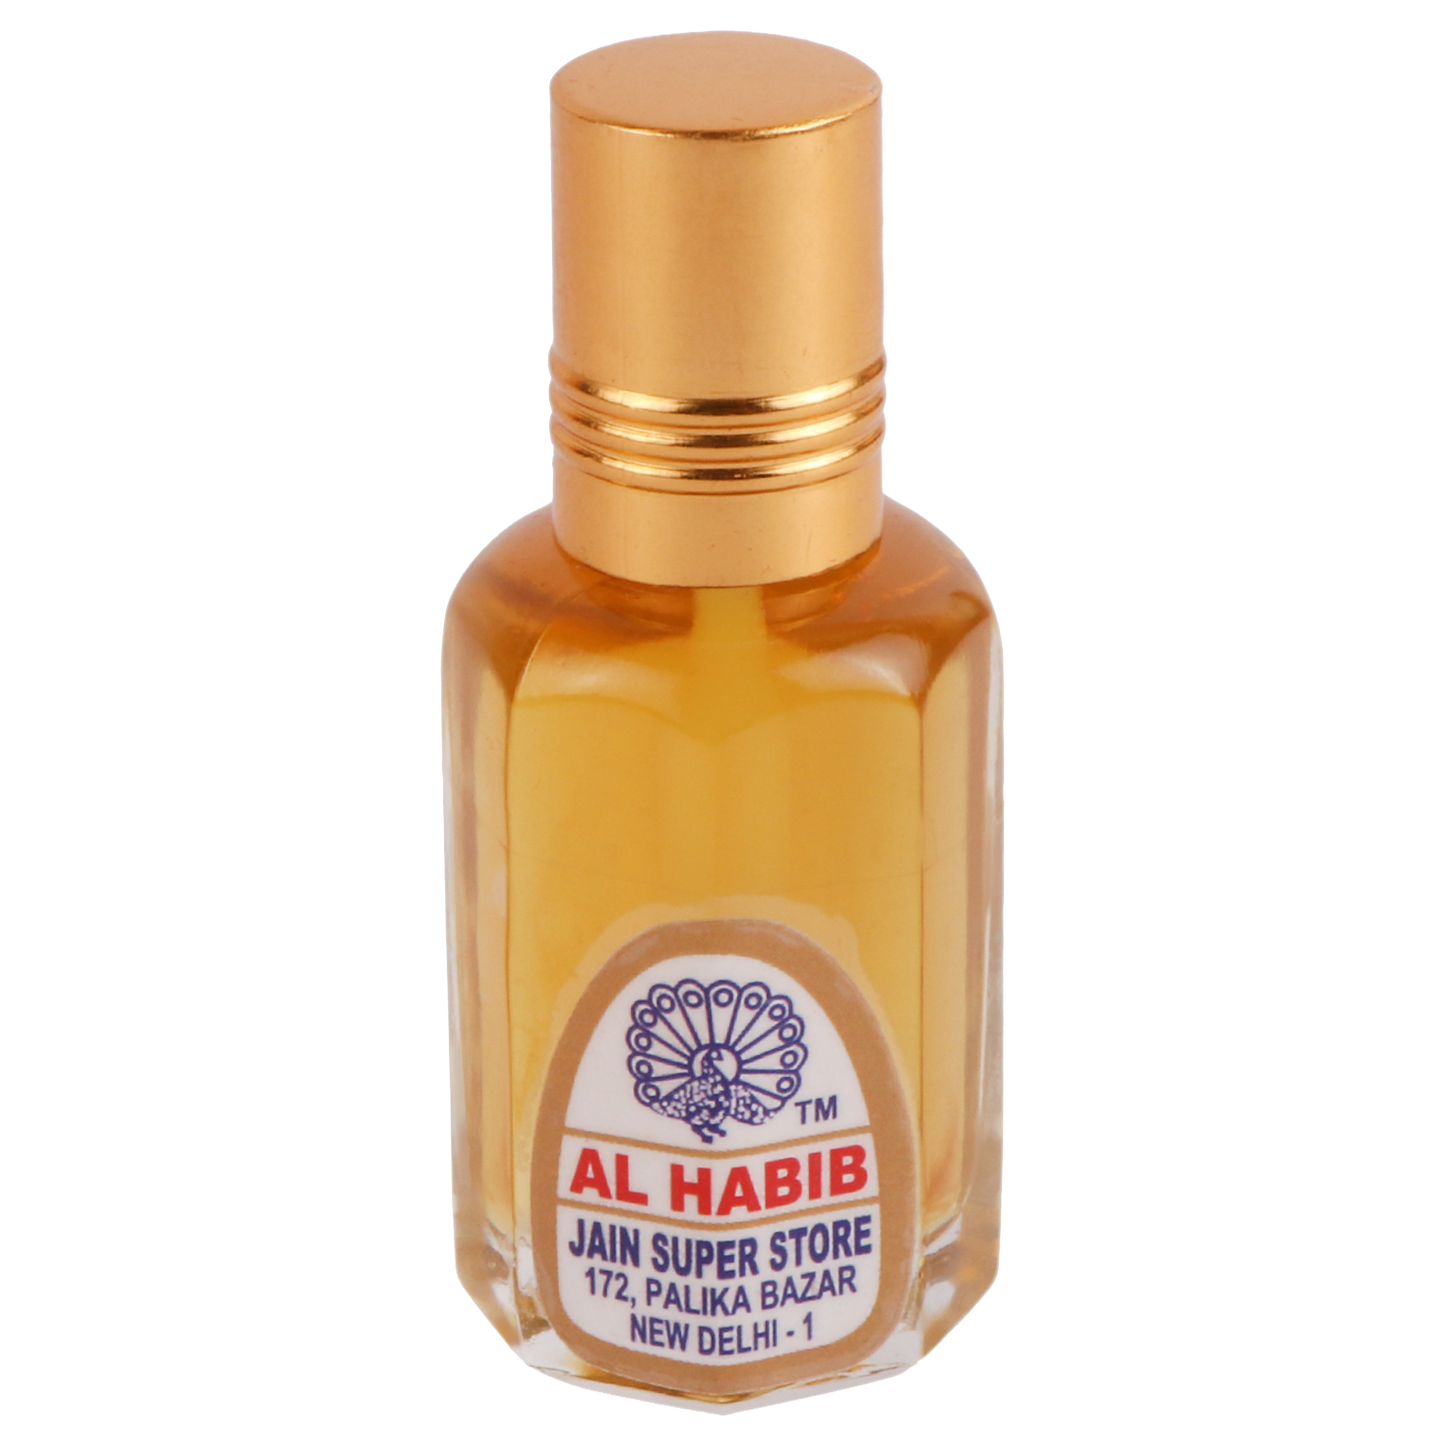 Al Habib Attar Perfume